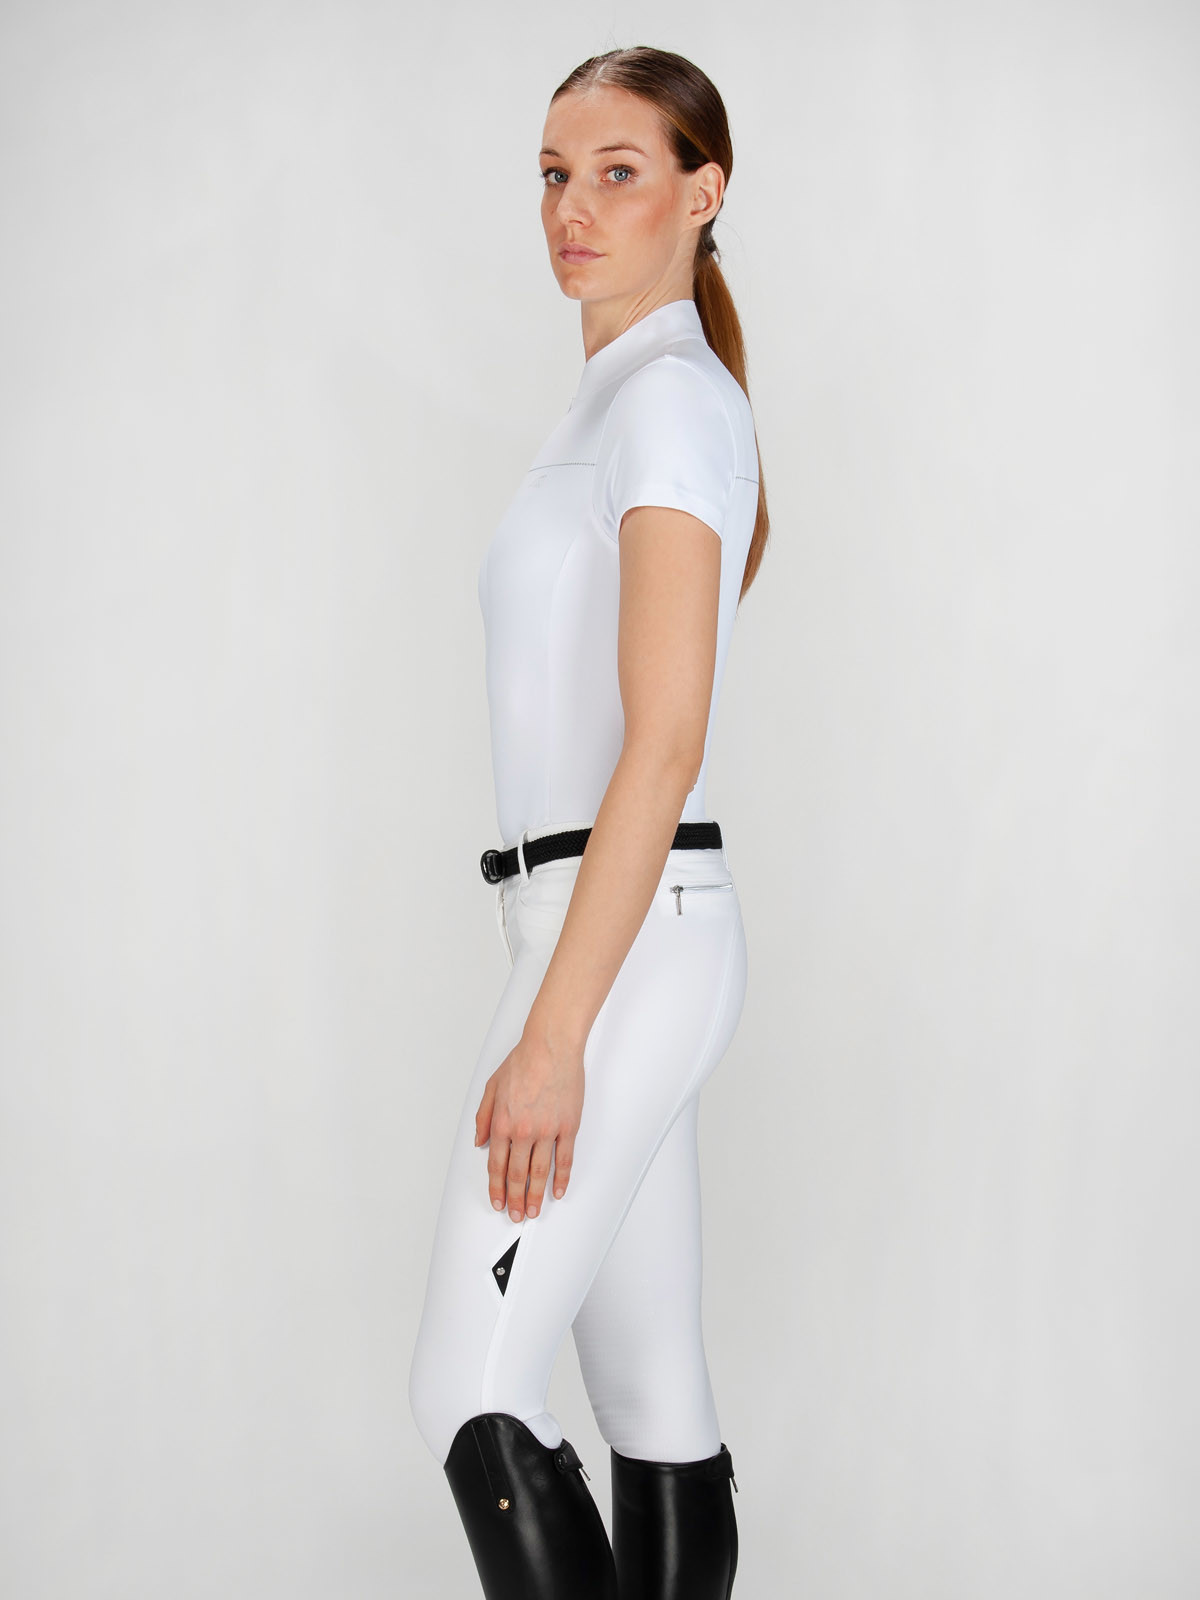 Equiline Damen Turnier Polo Shirt Catherine - white - L